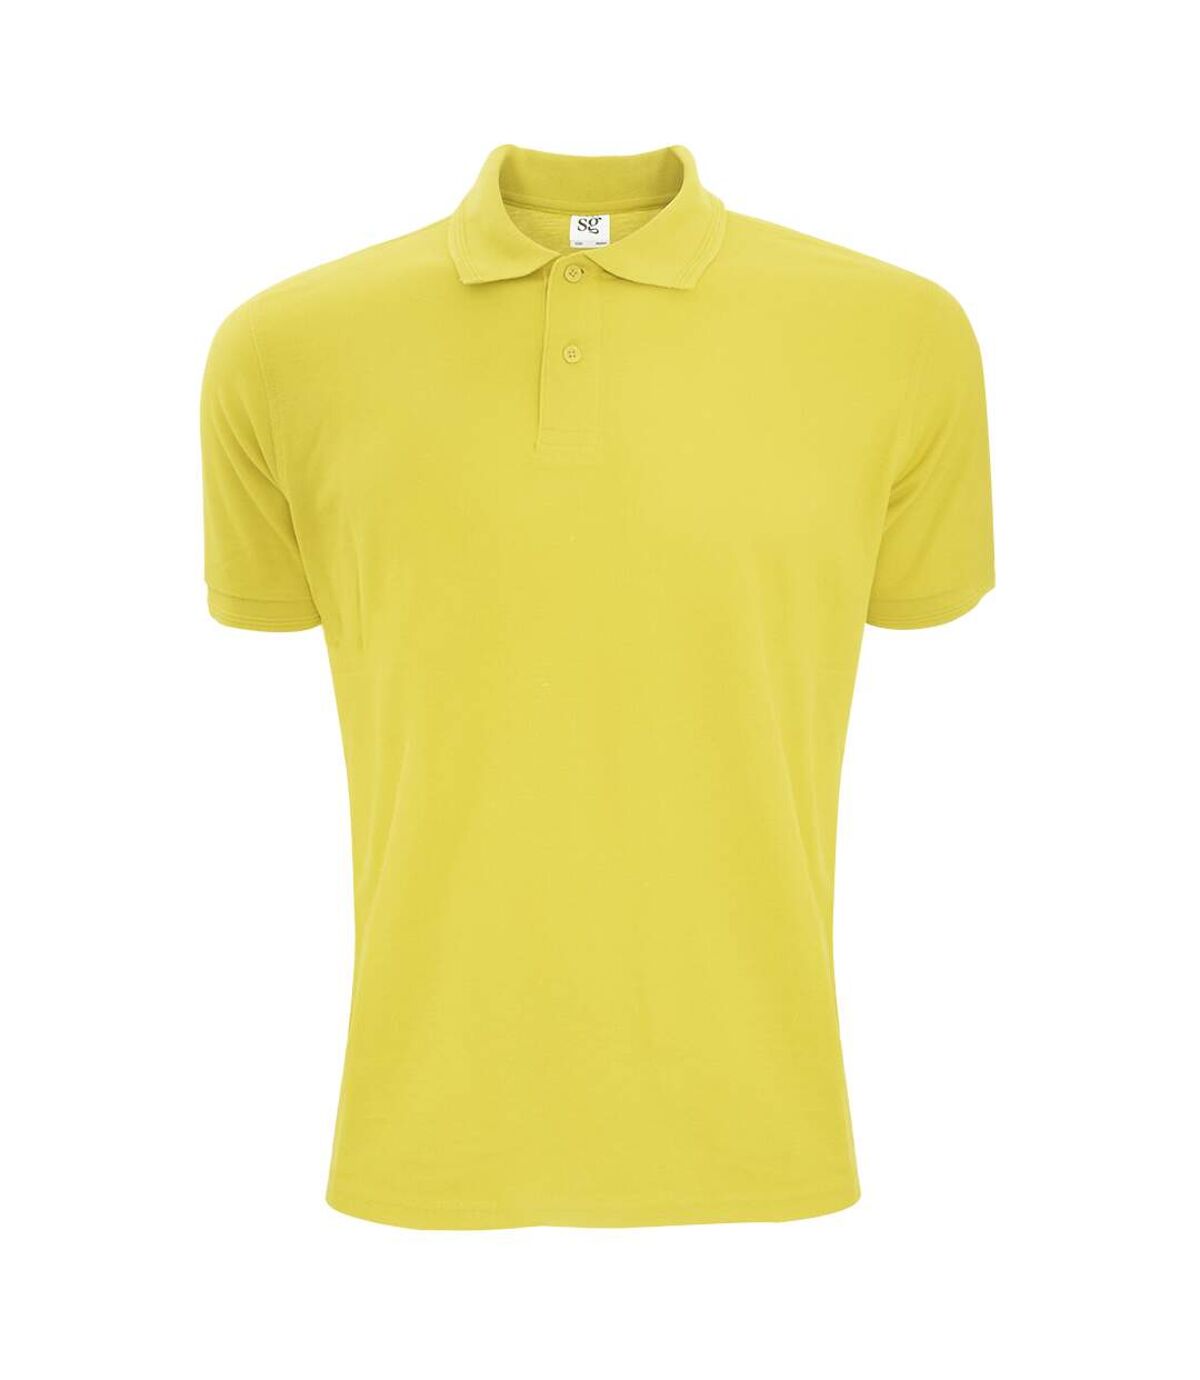 SG Mens Polycotton Short Sleeve Polo Shirt (Yellow) - UTBC1084